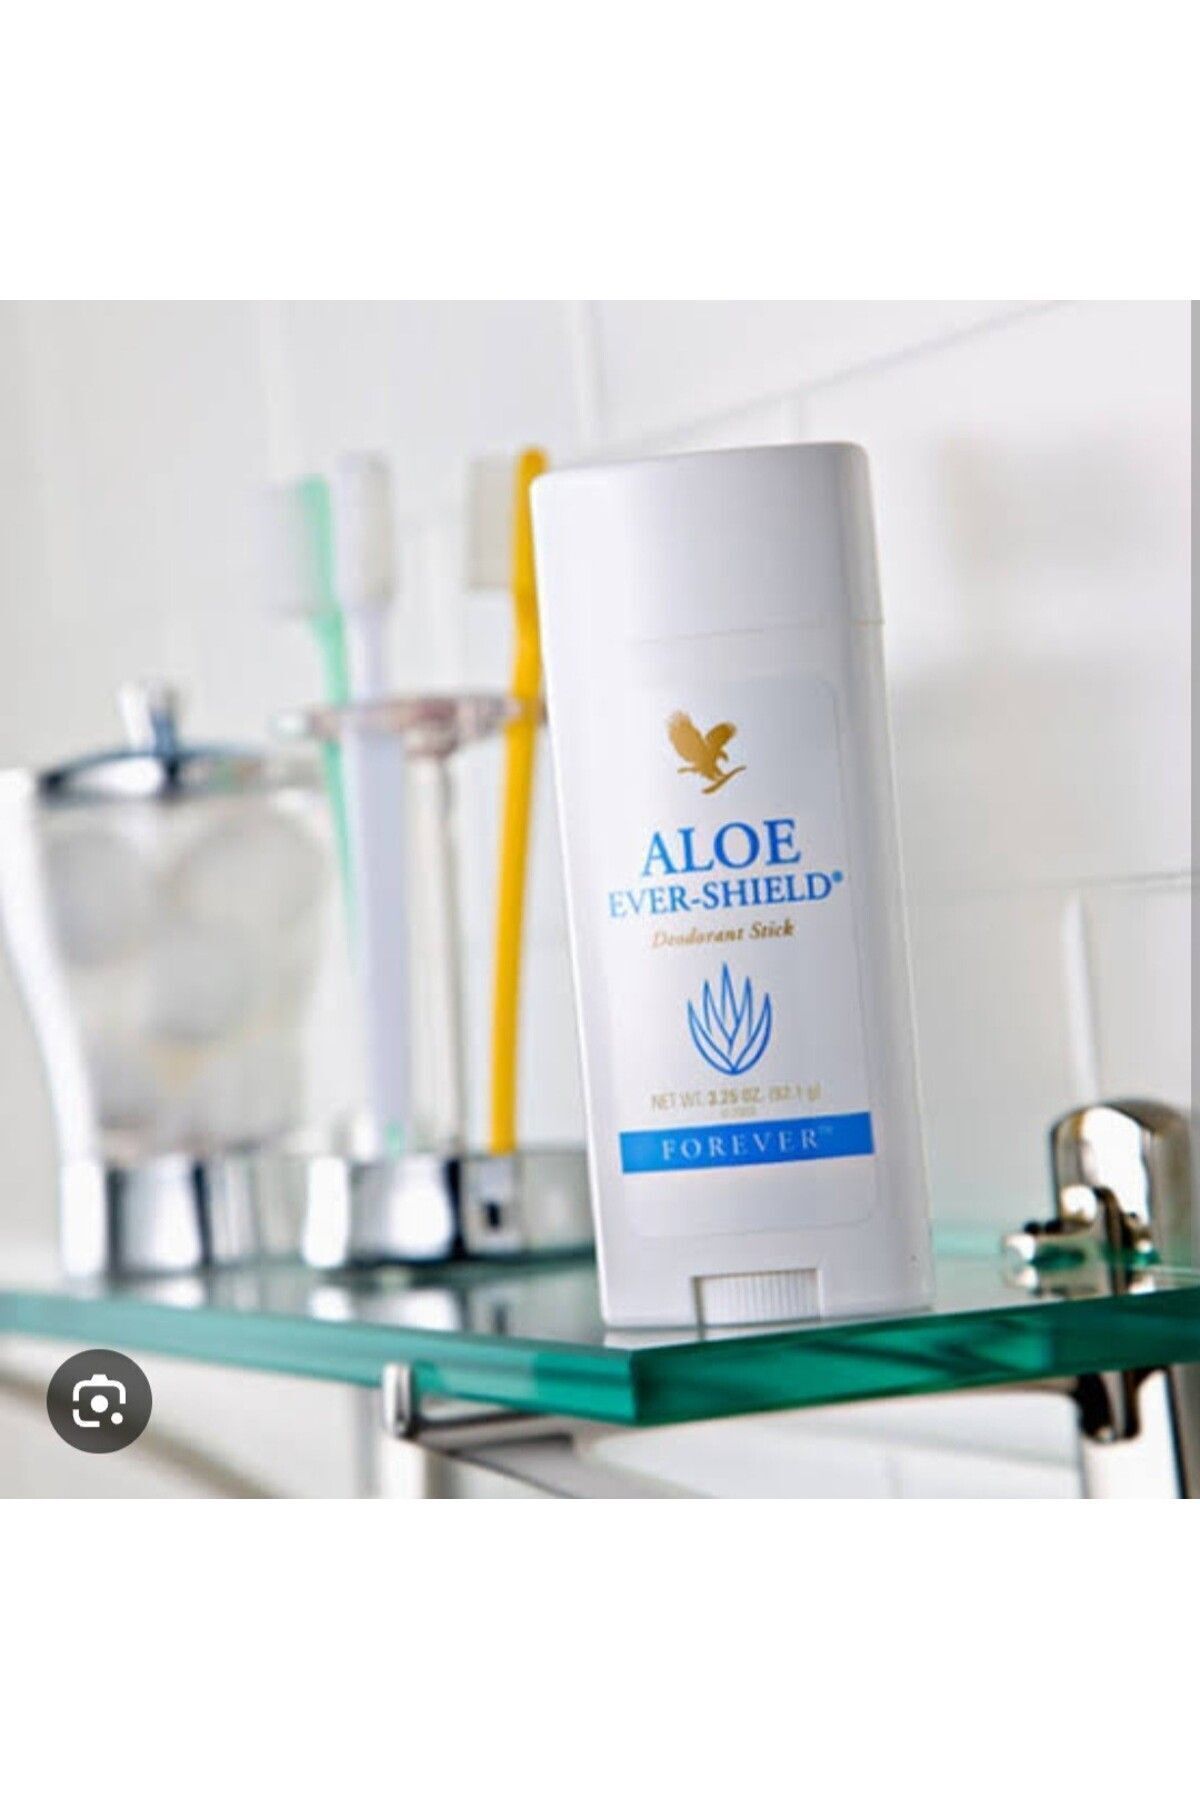 Forever Aloe Ever - Shield Deodorant-067